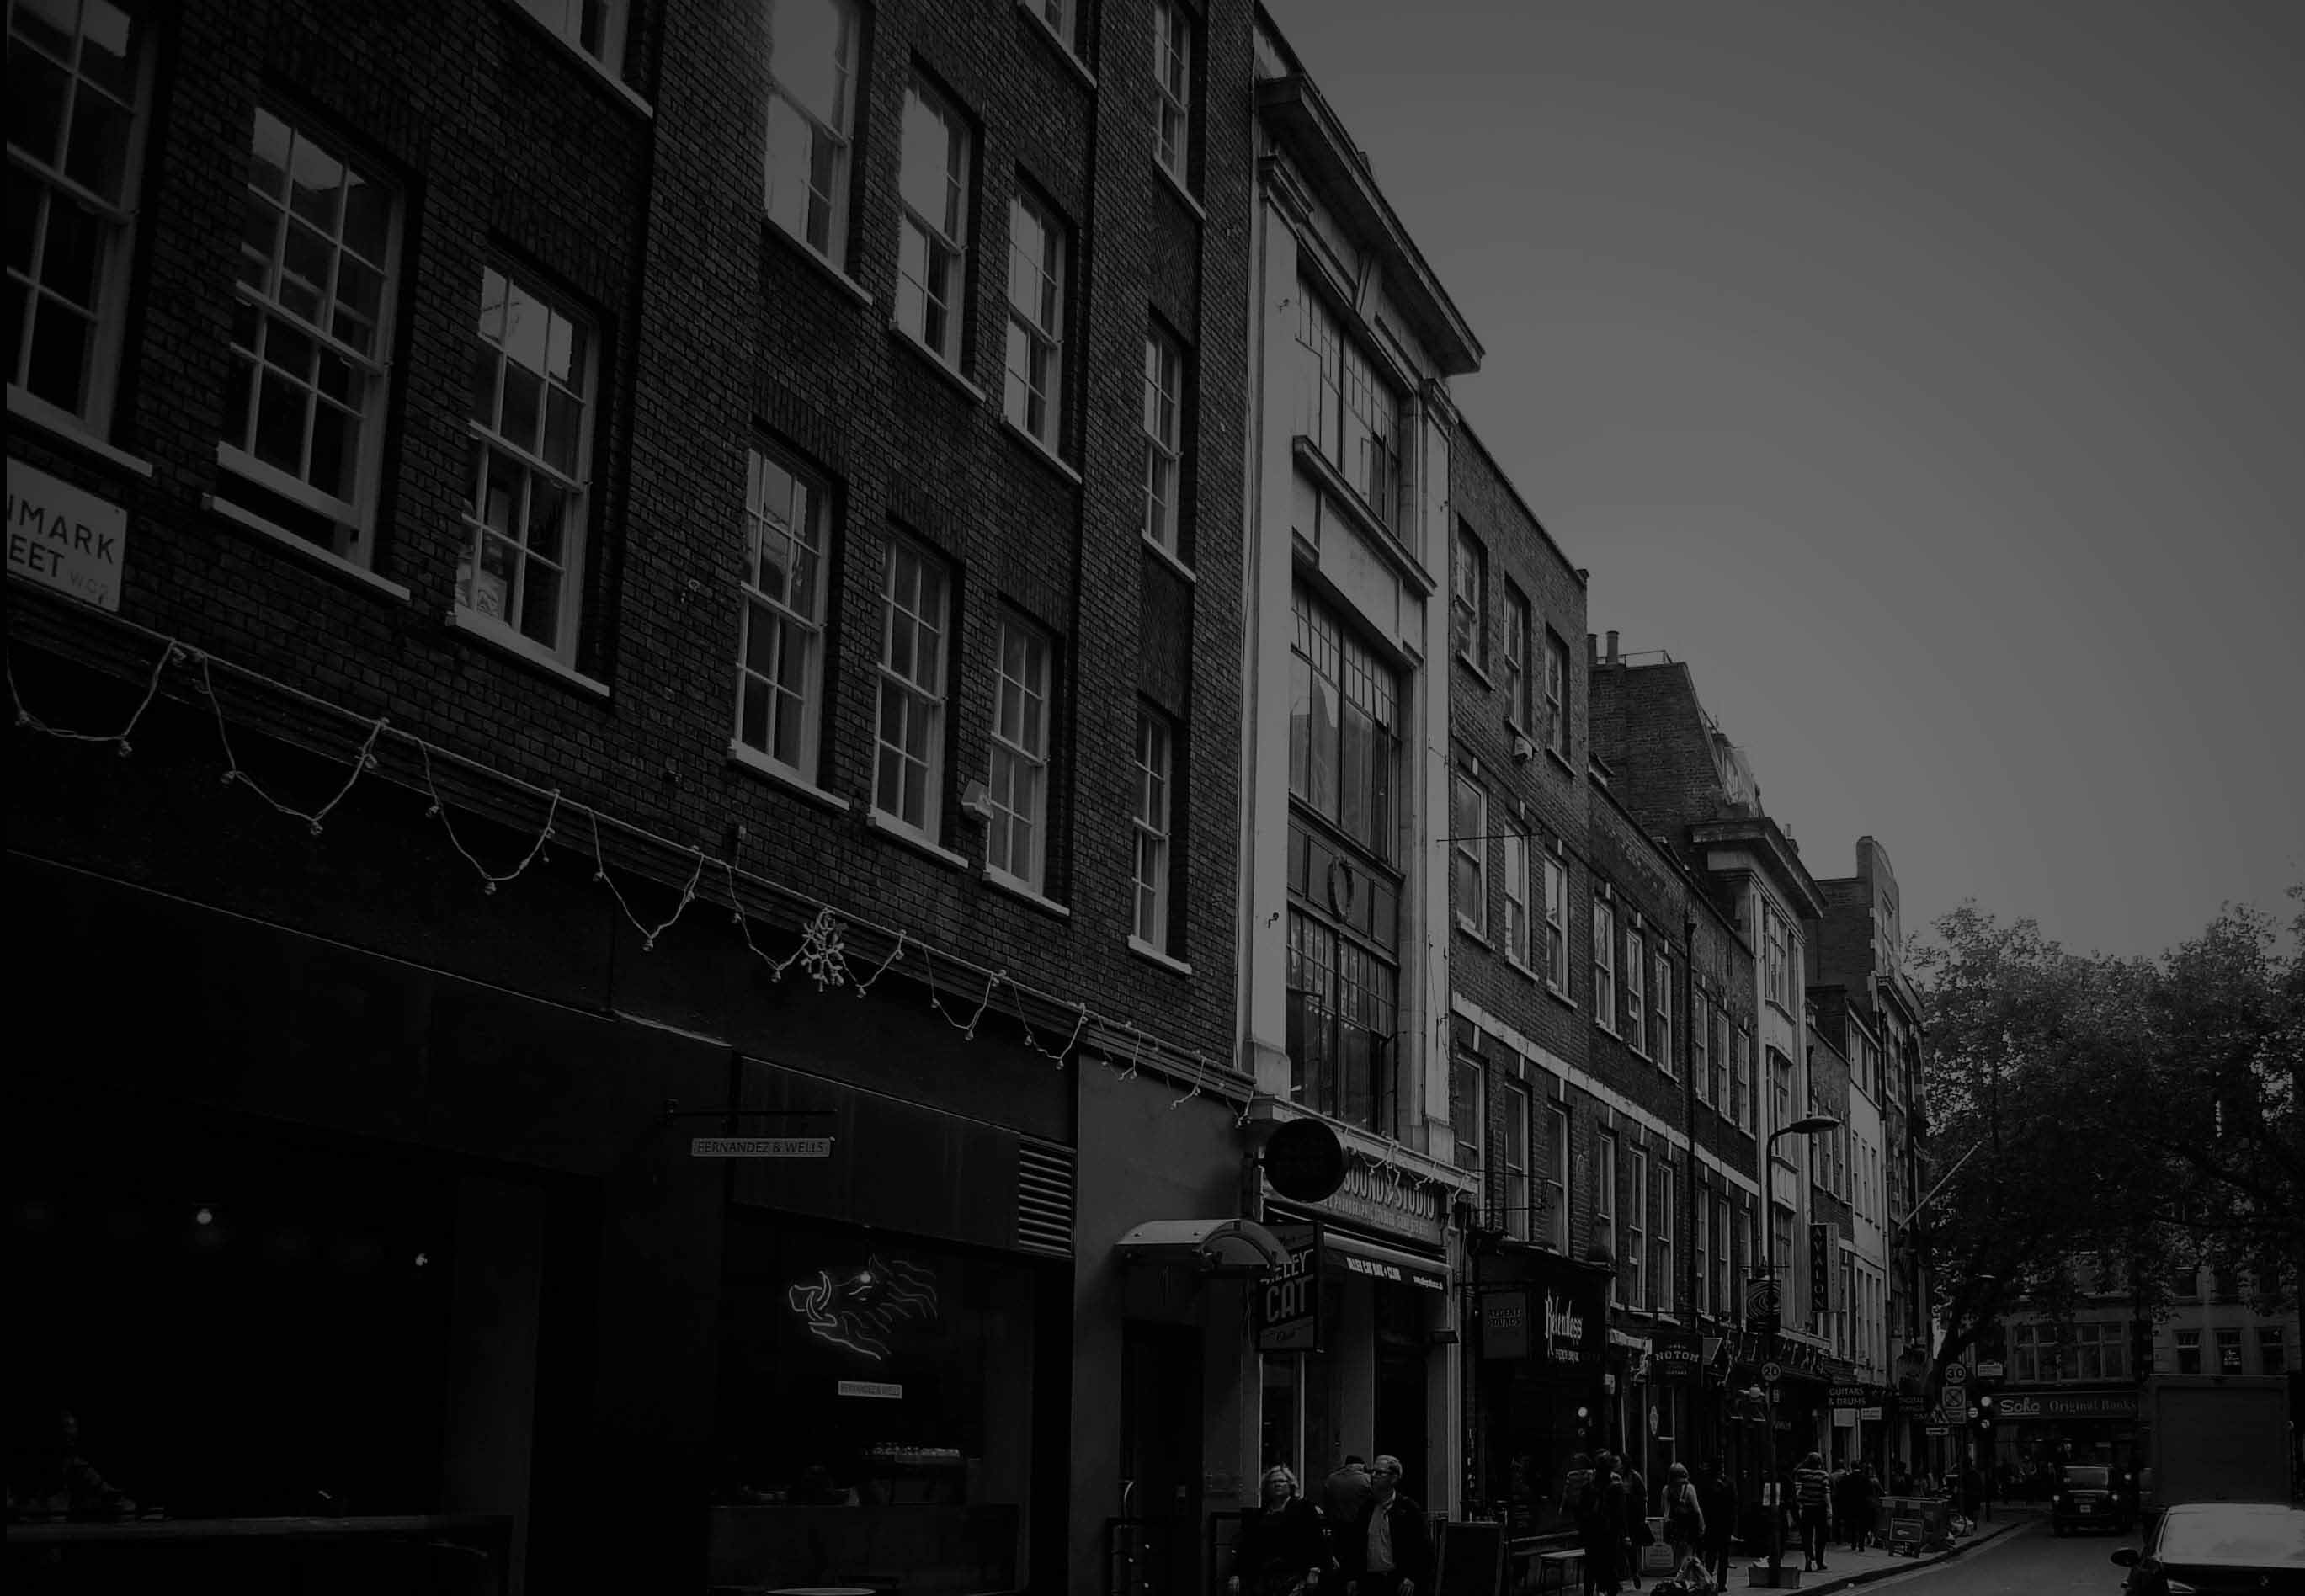 Grayscale photo of Denmark Street